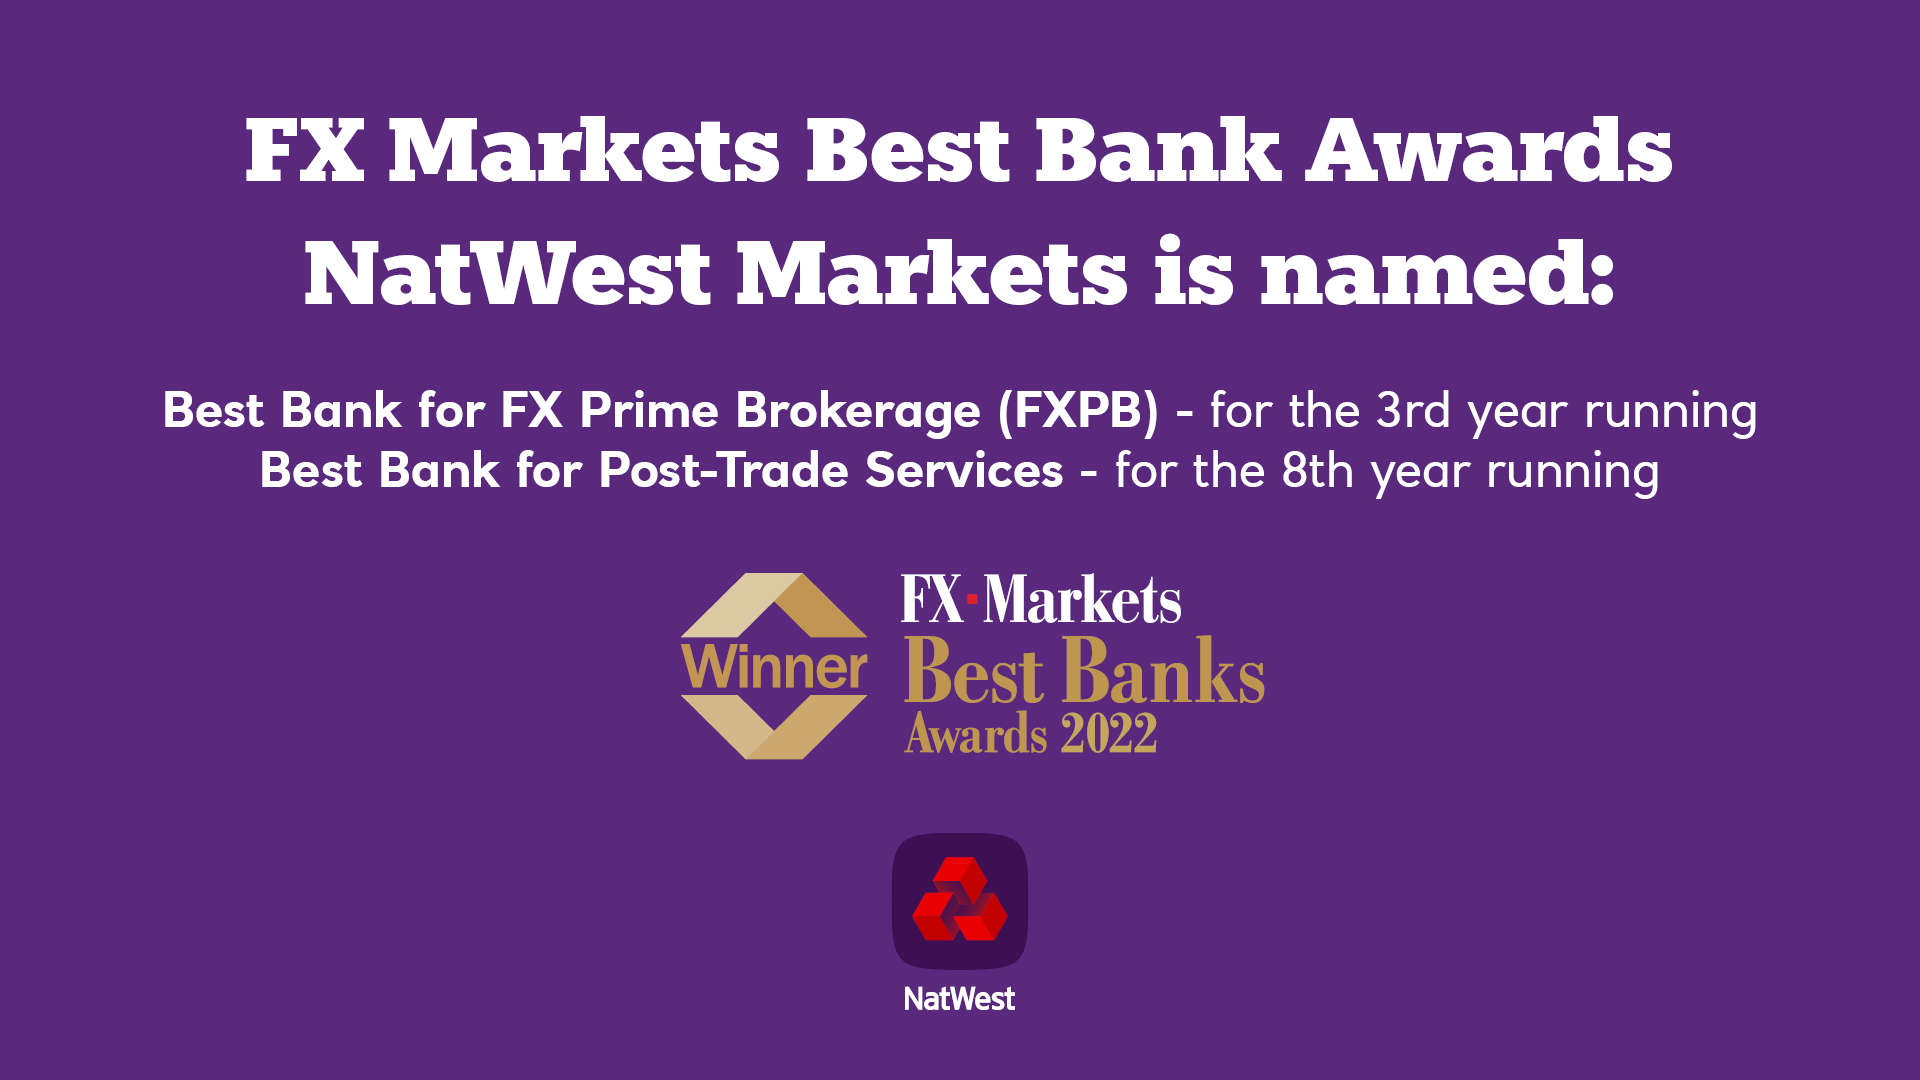 FX Markets best bank awards image